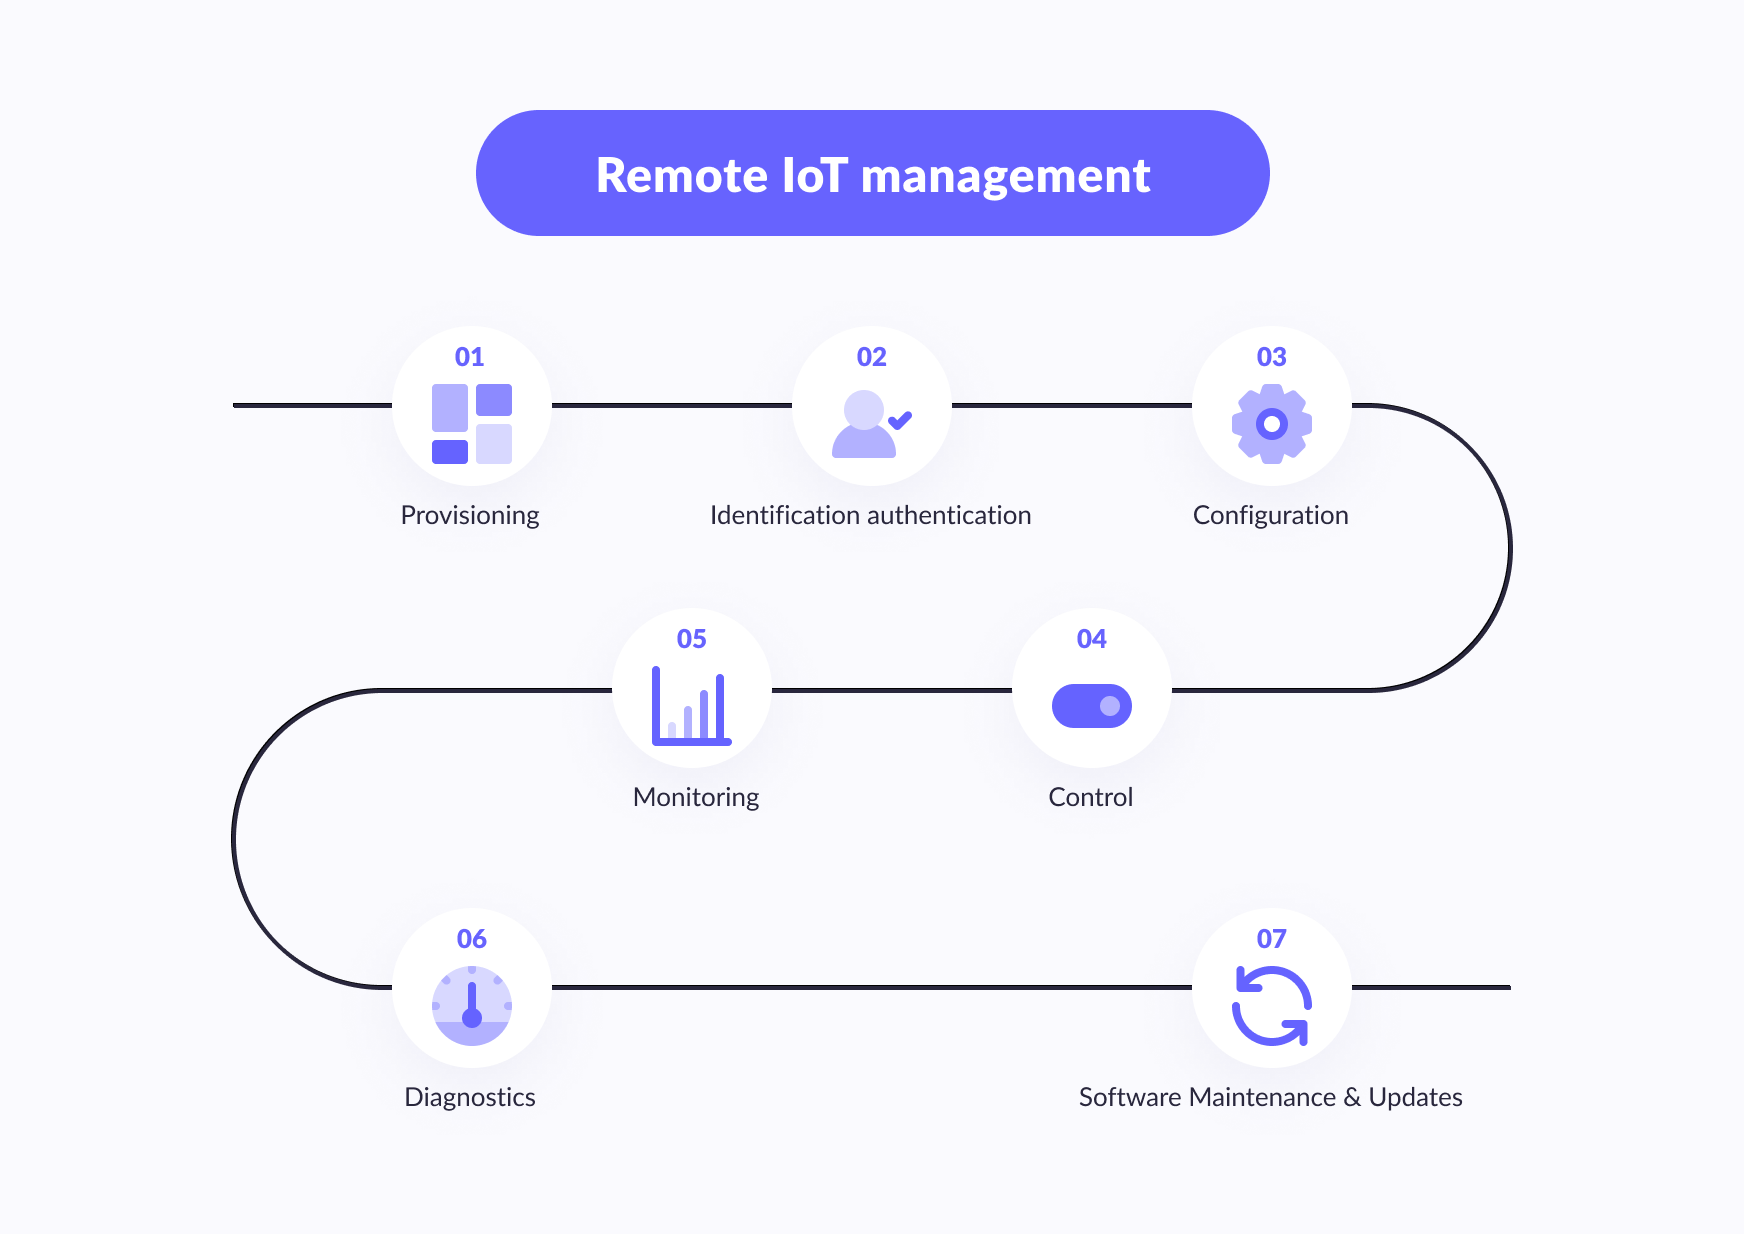 Remote IoT management